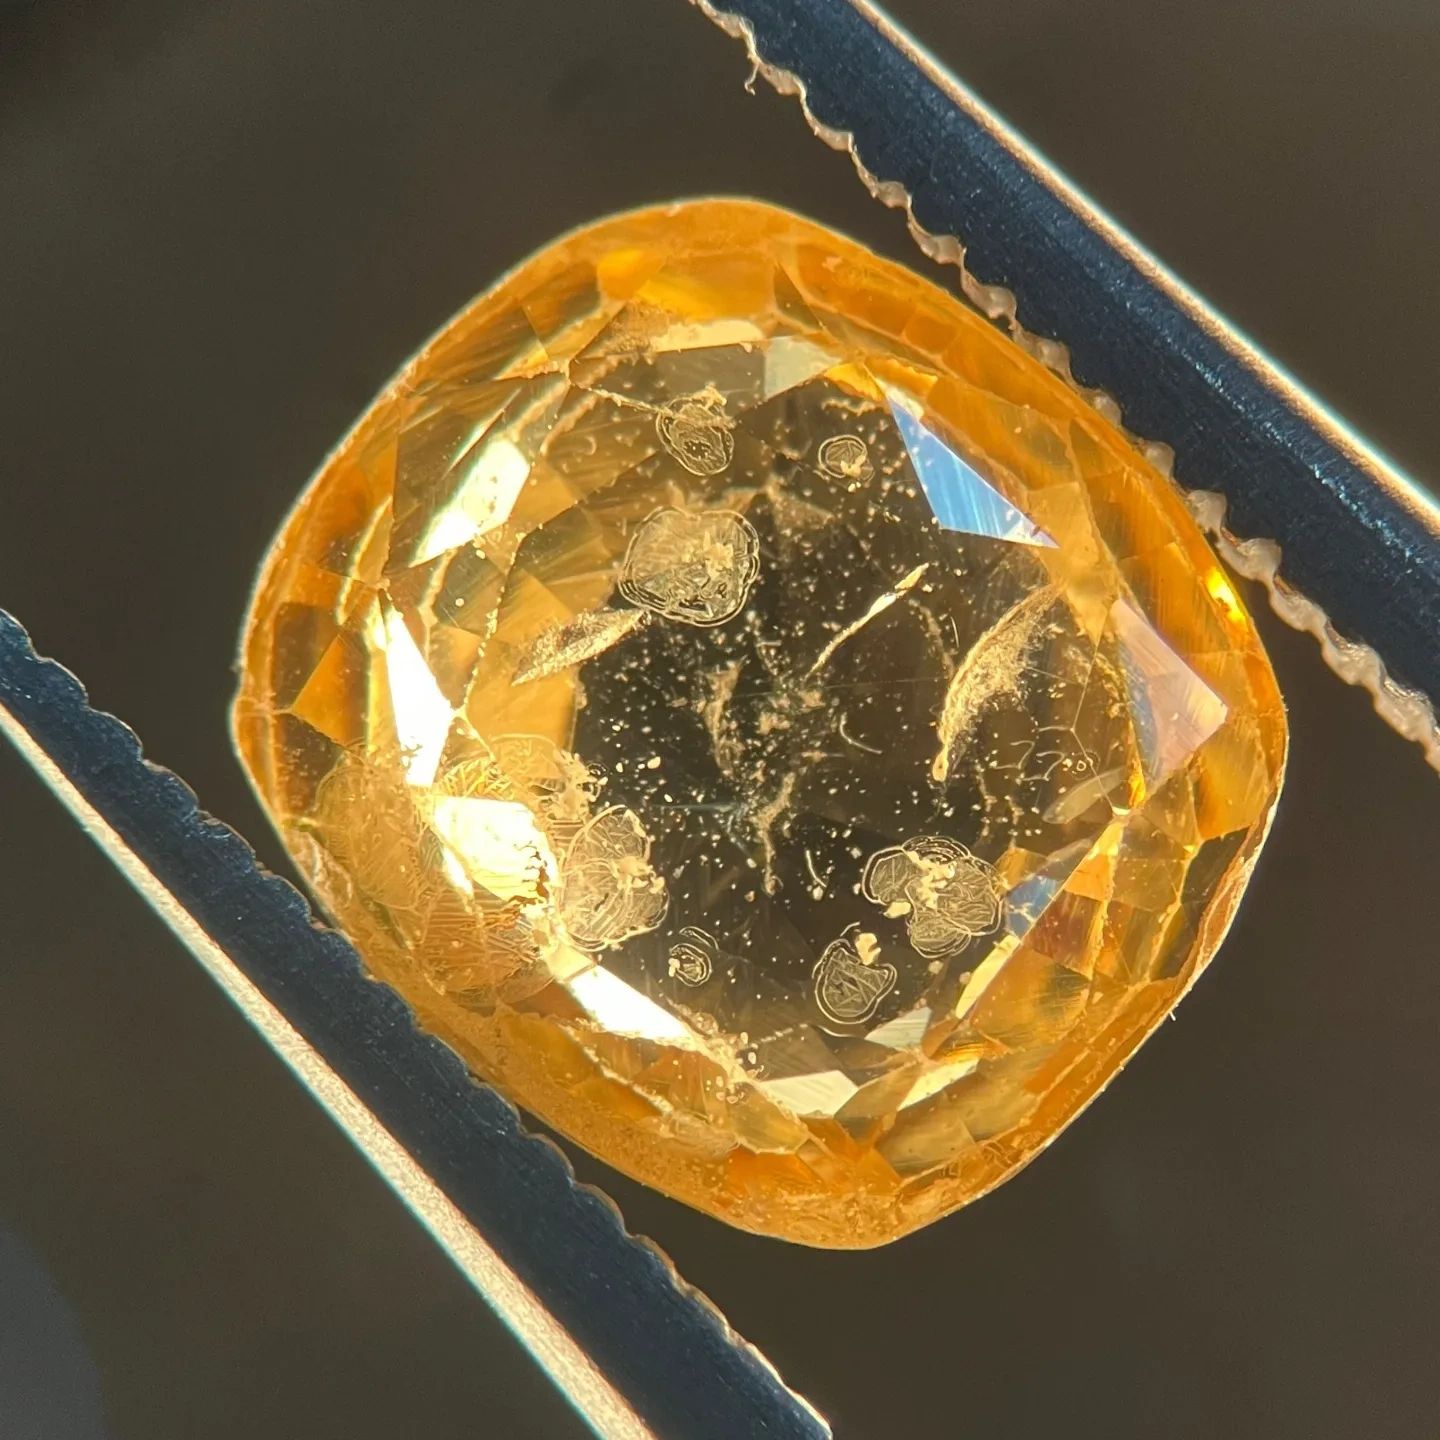 Beryllium defused natural yellow sapphire

Diffusion treatments enhance stone color